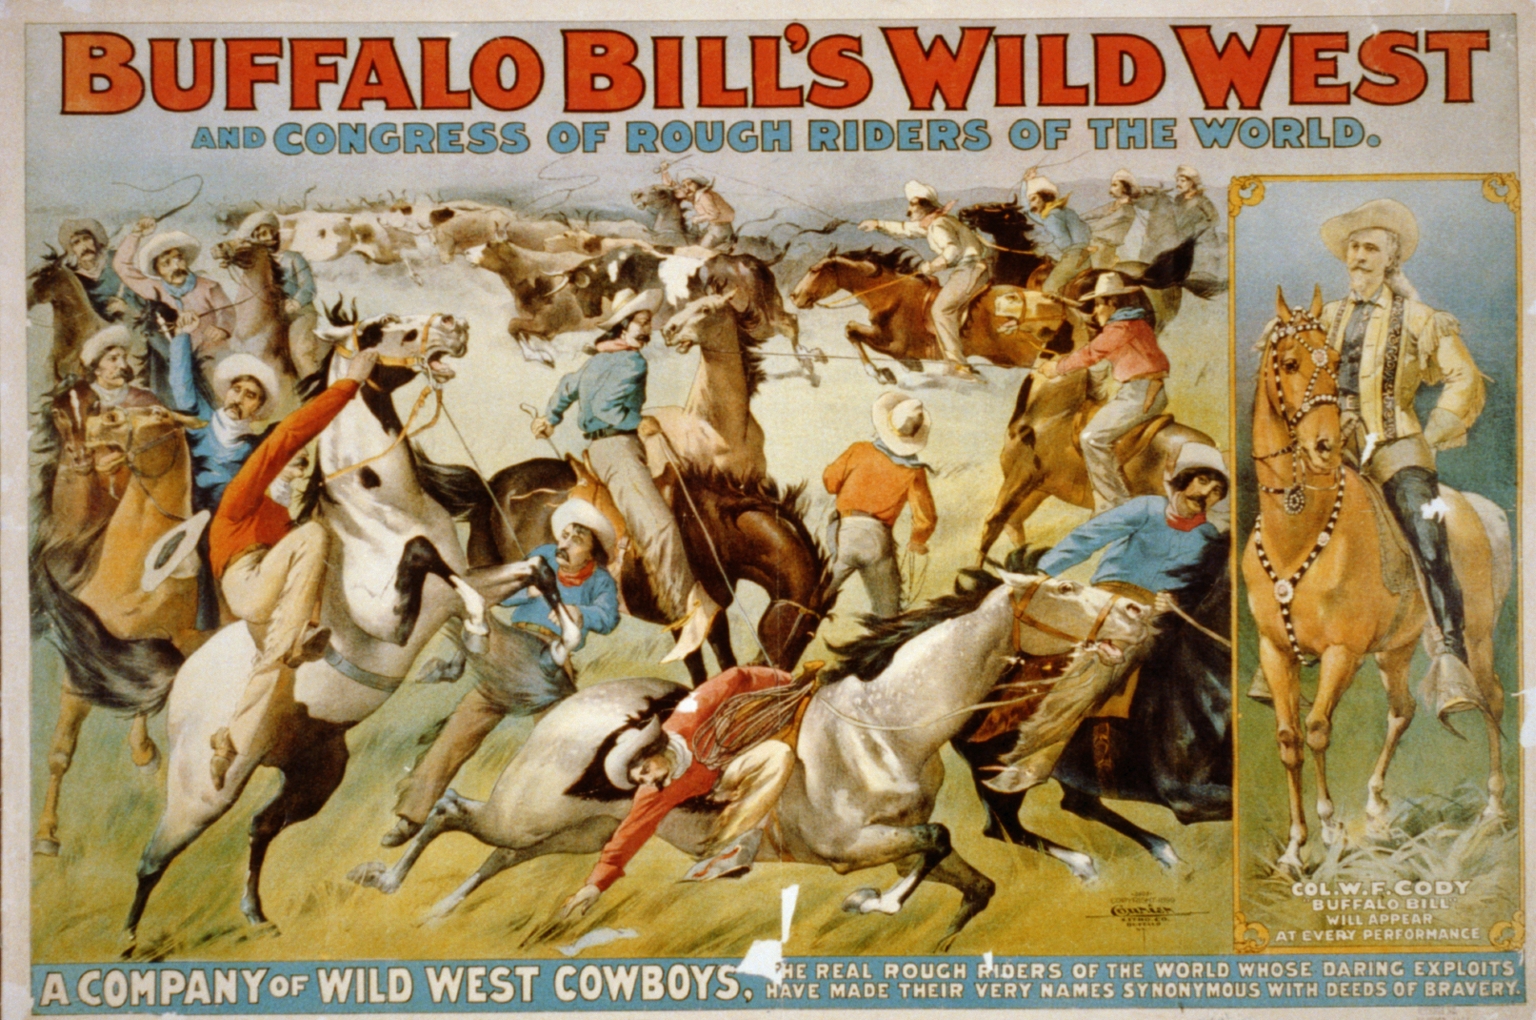 Original poster for Buffalo Bill's Wild West Show